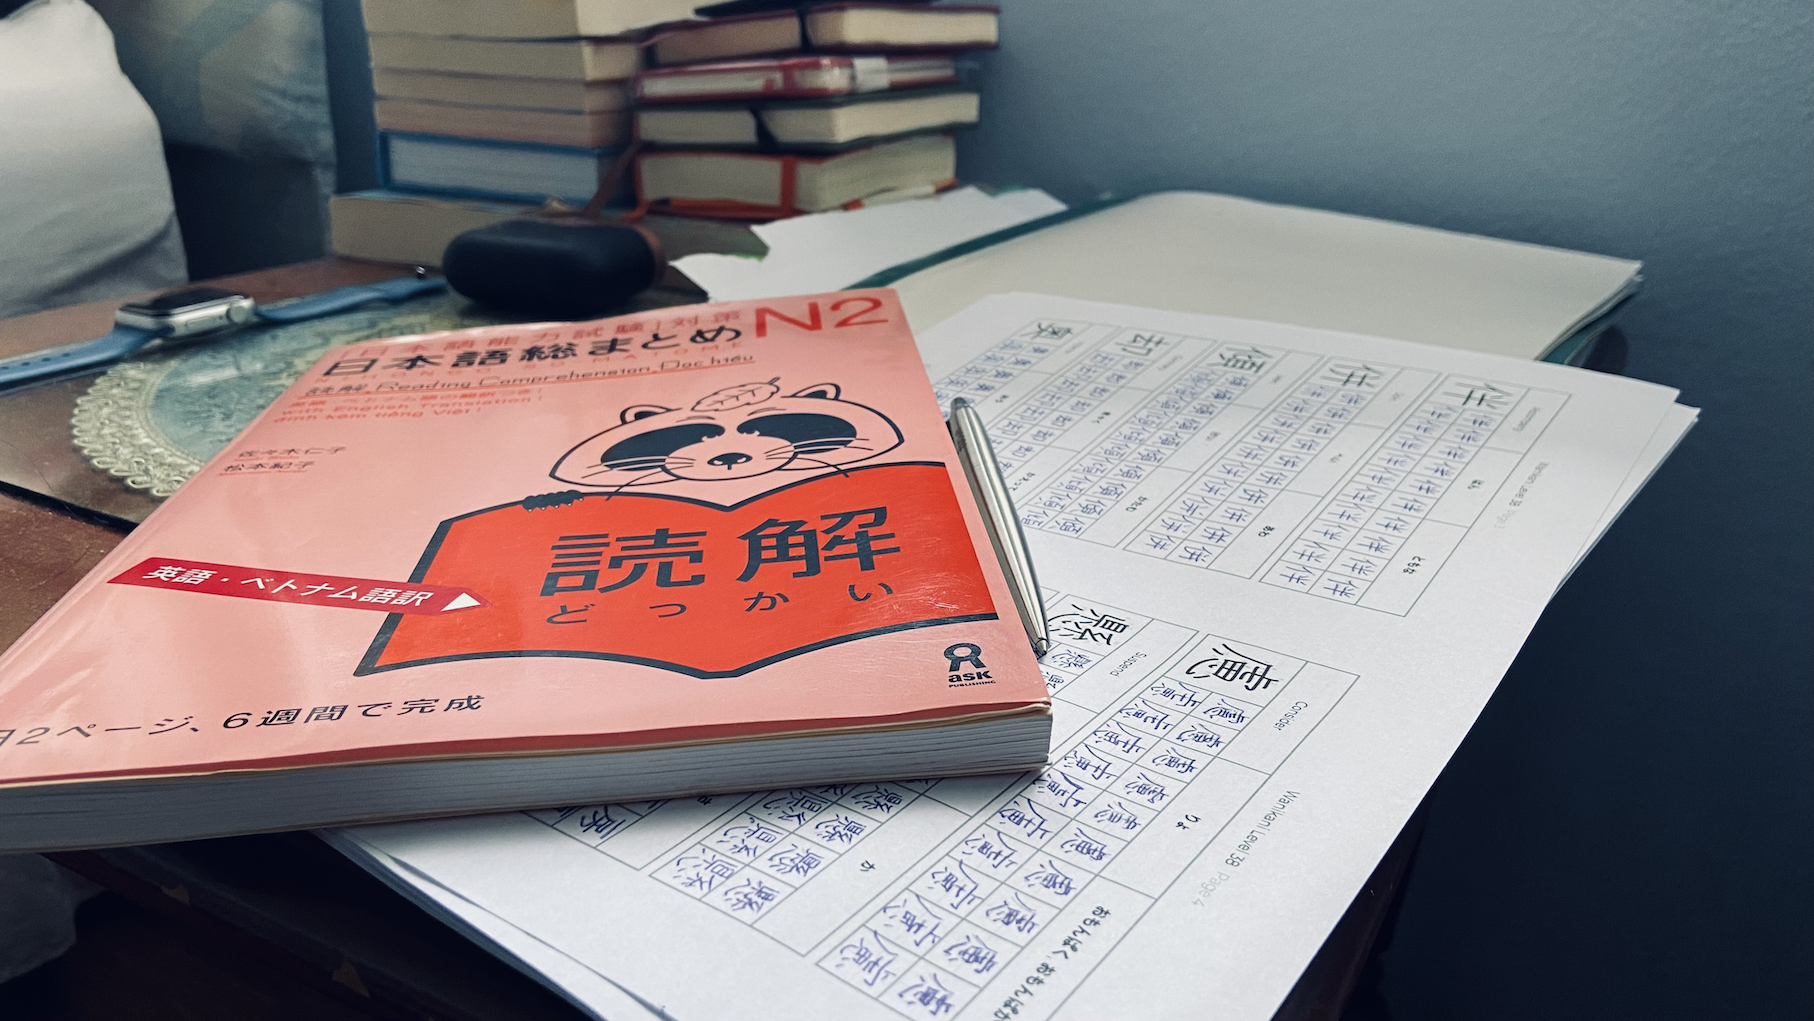 A photo of So-matome Dokkai N2 book and kanji writing worksheets